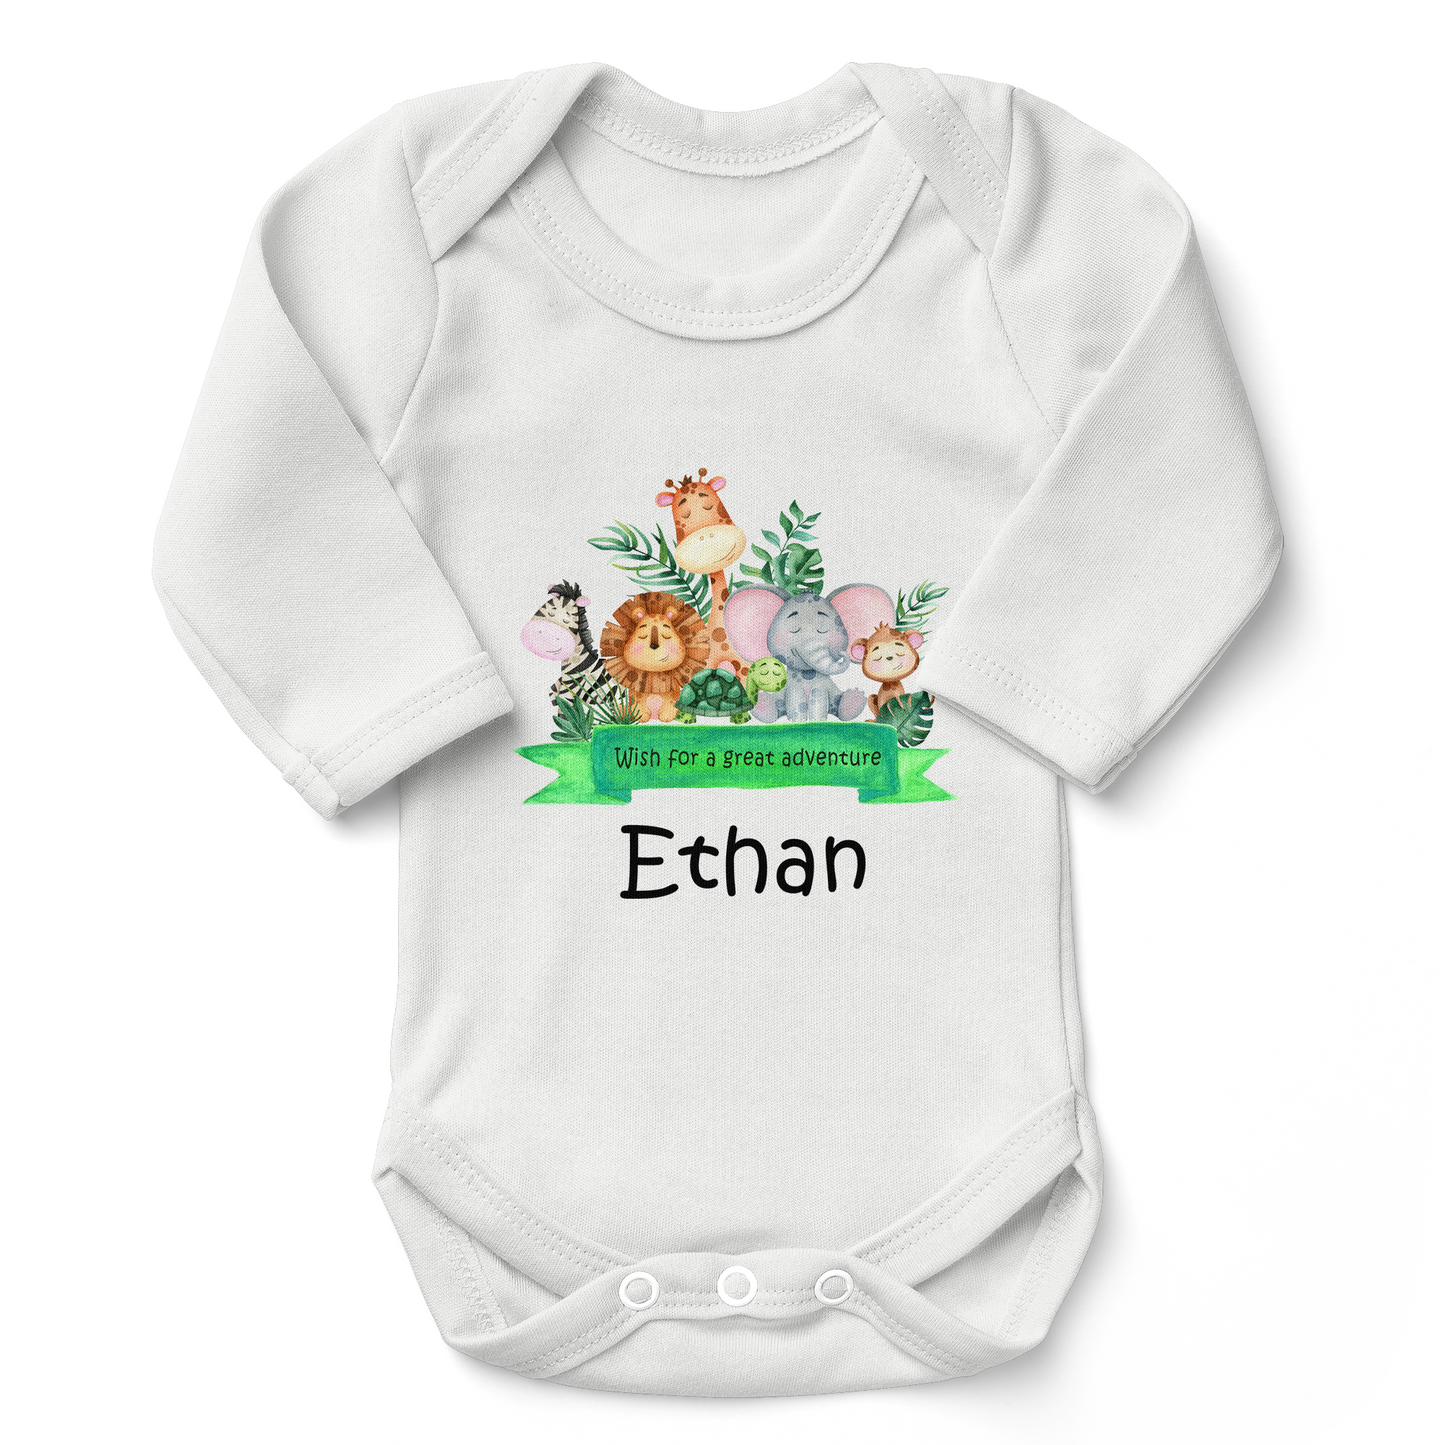 Endanzoo Organic Baby Neutral Clothing Set - Safari Hugs